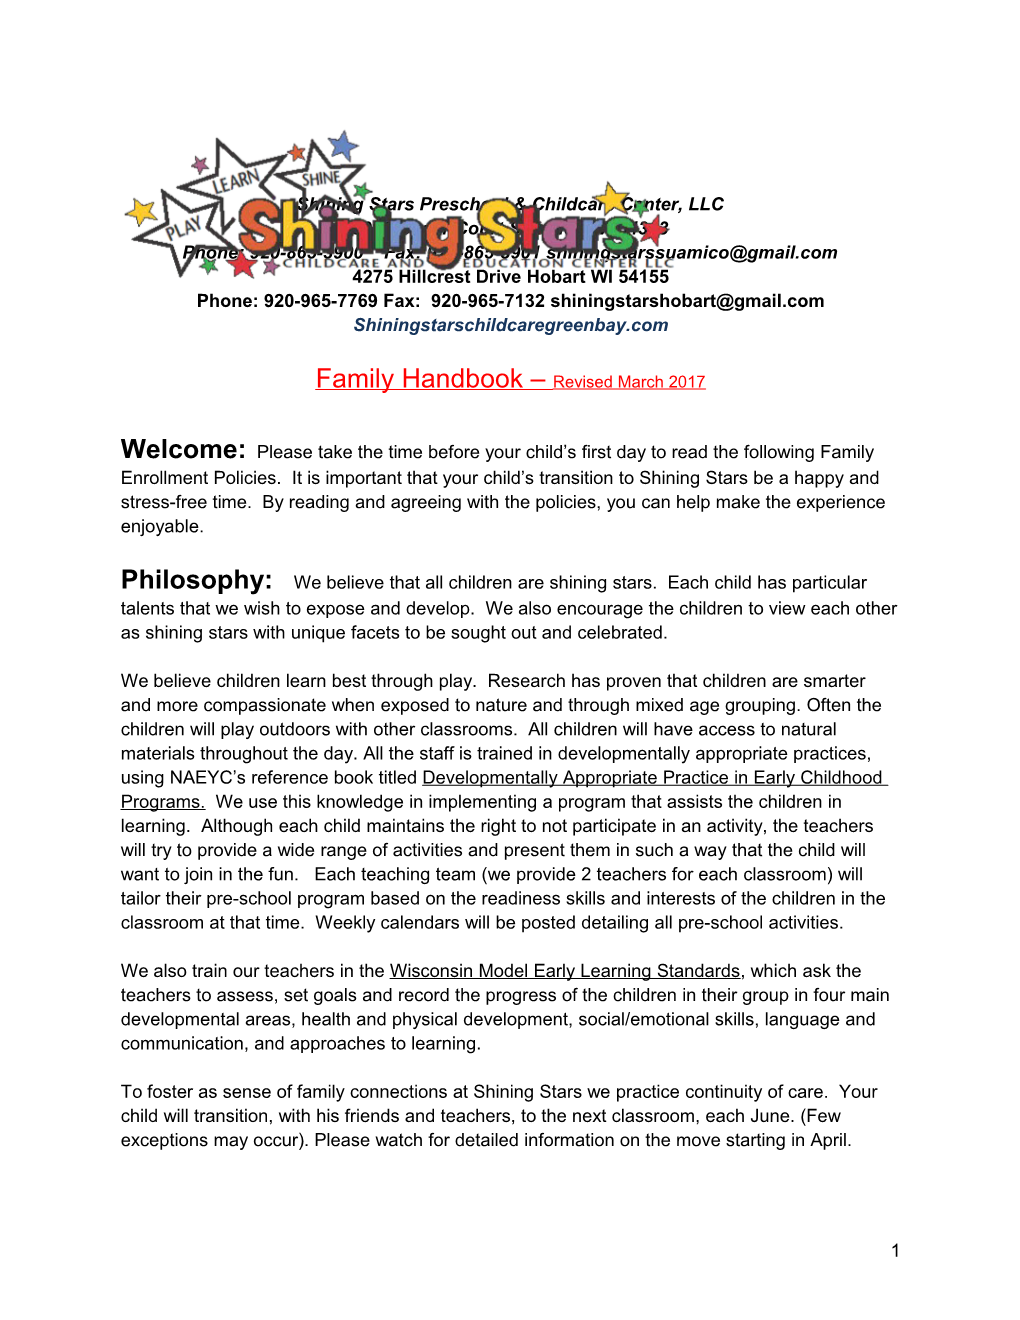 Family Handbook Revised 12-13